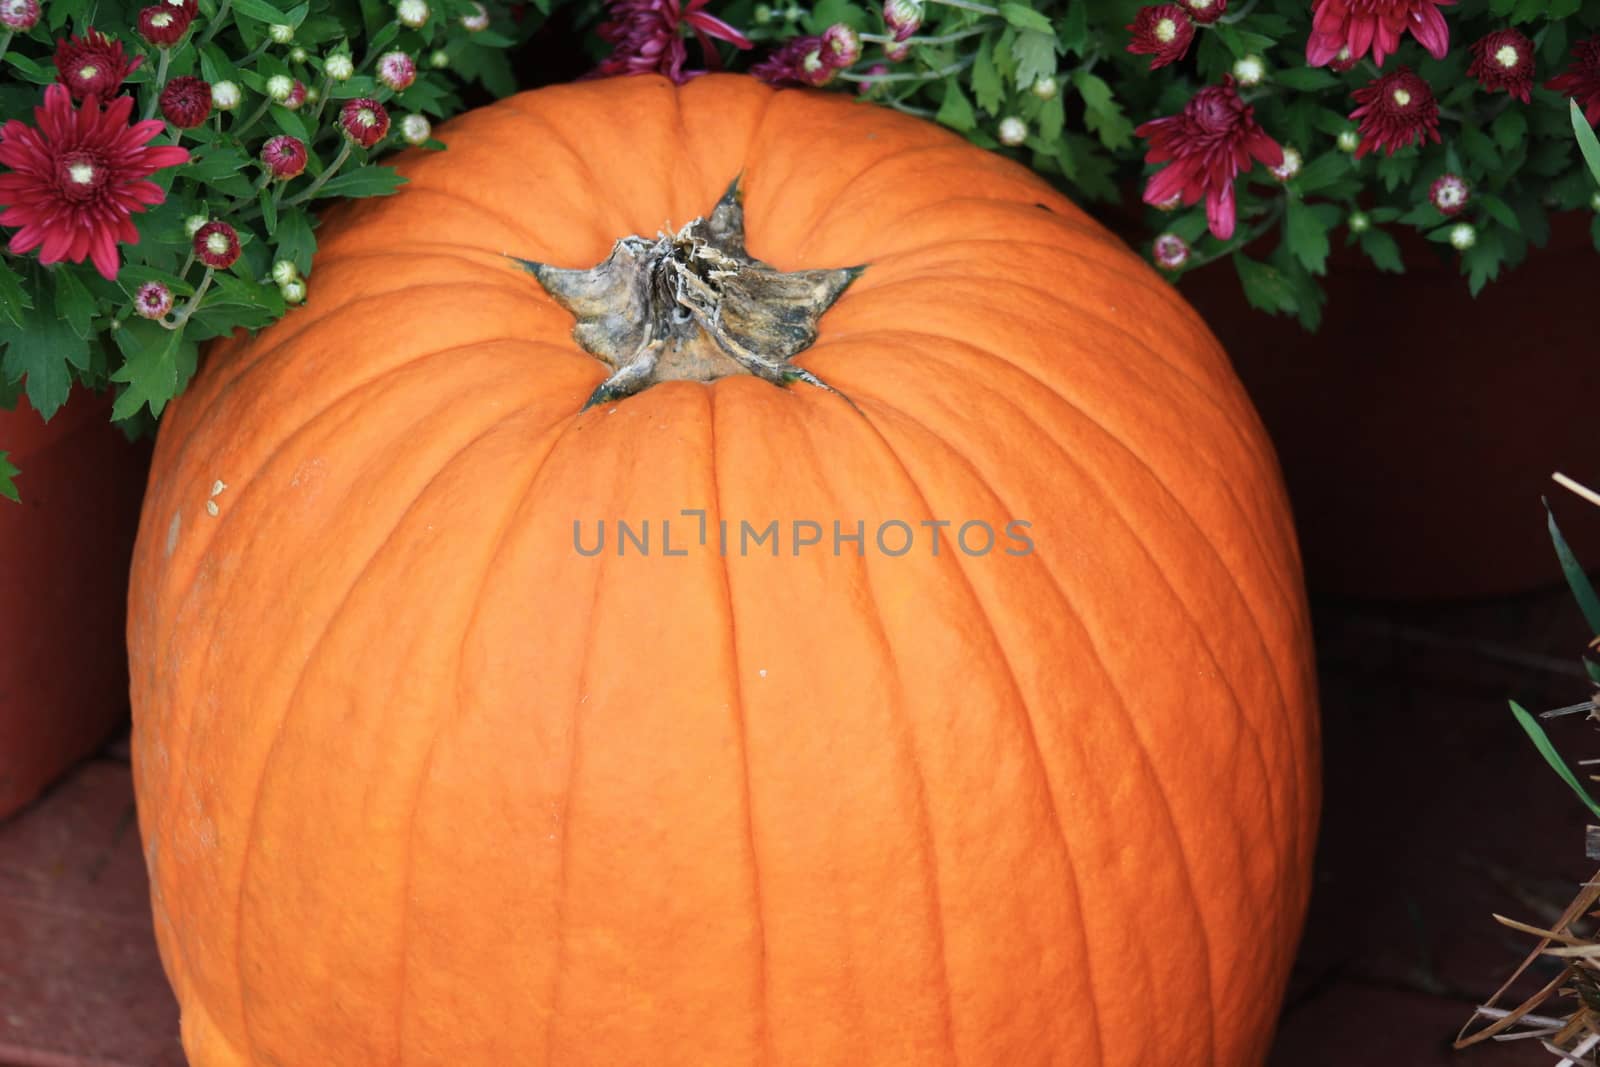 Stem and top of pumpkin